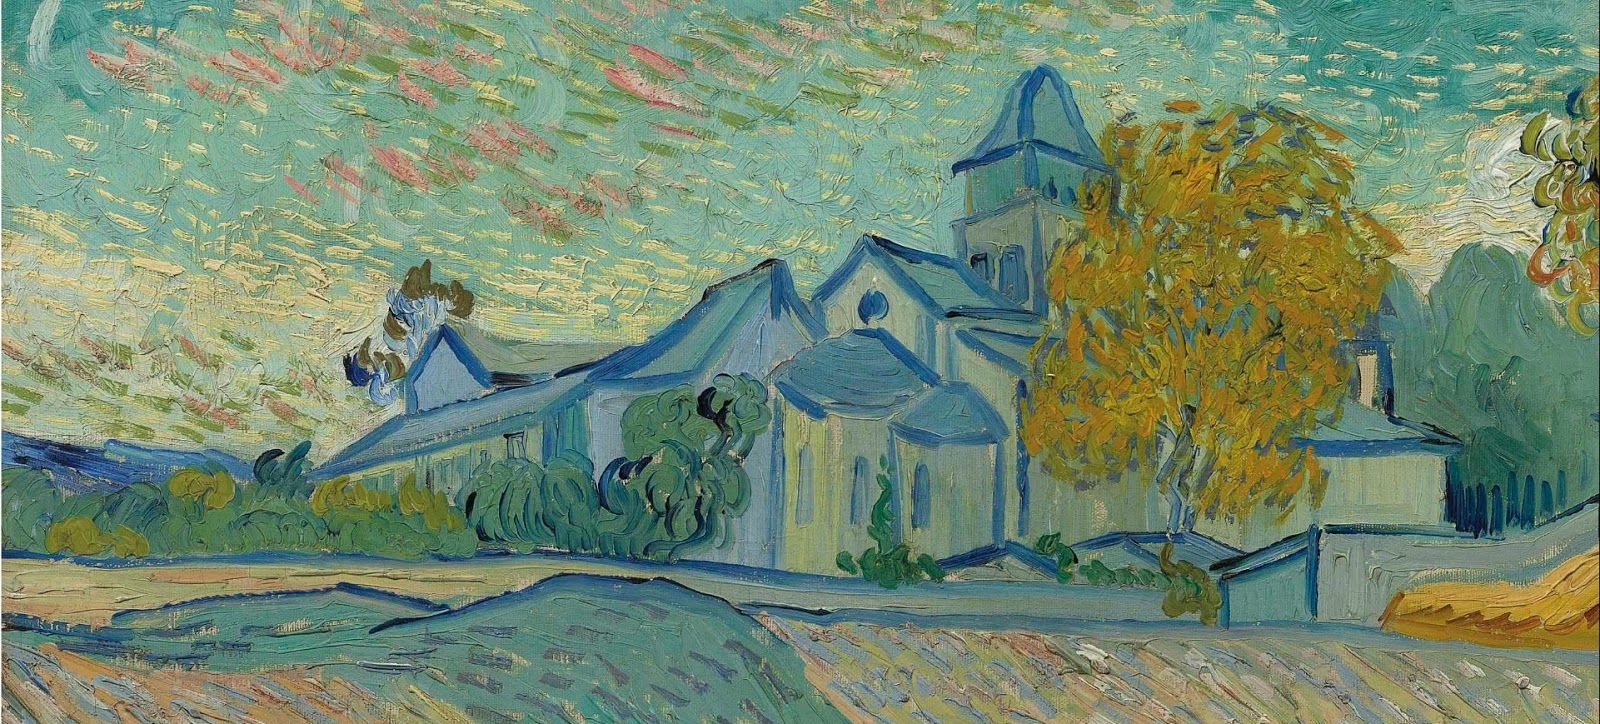 Vincent+Van+Gogh-1853-1890 (498).jpg